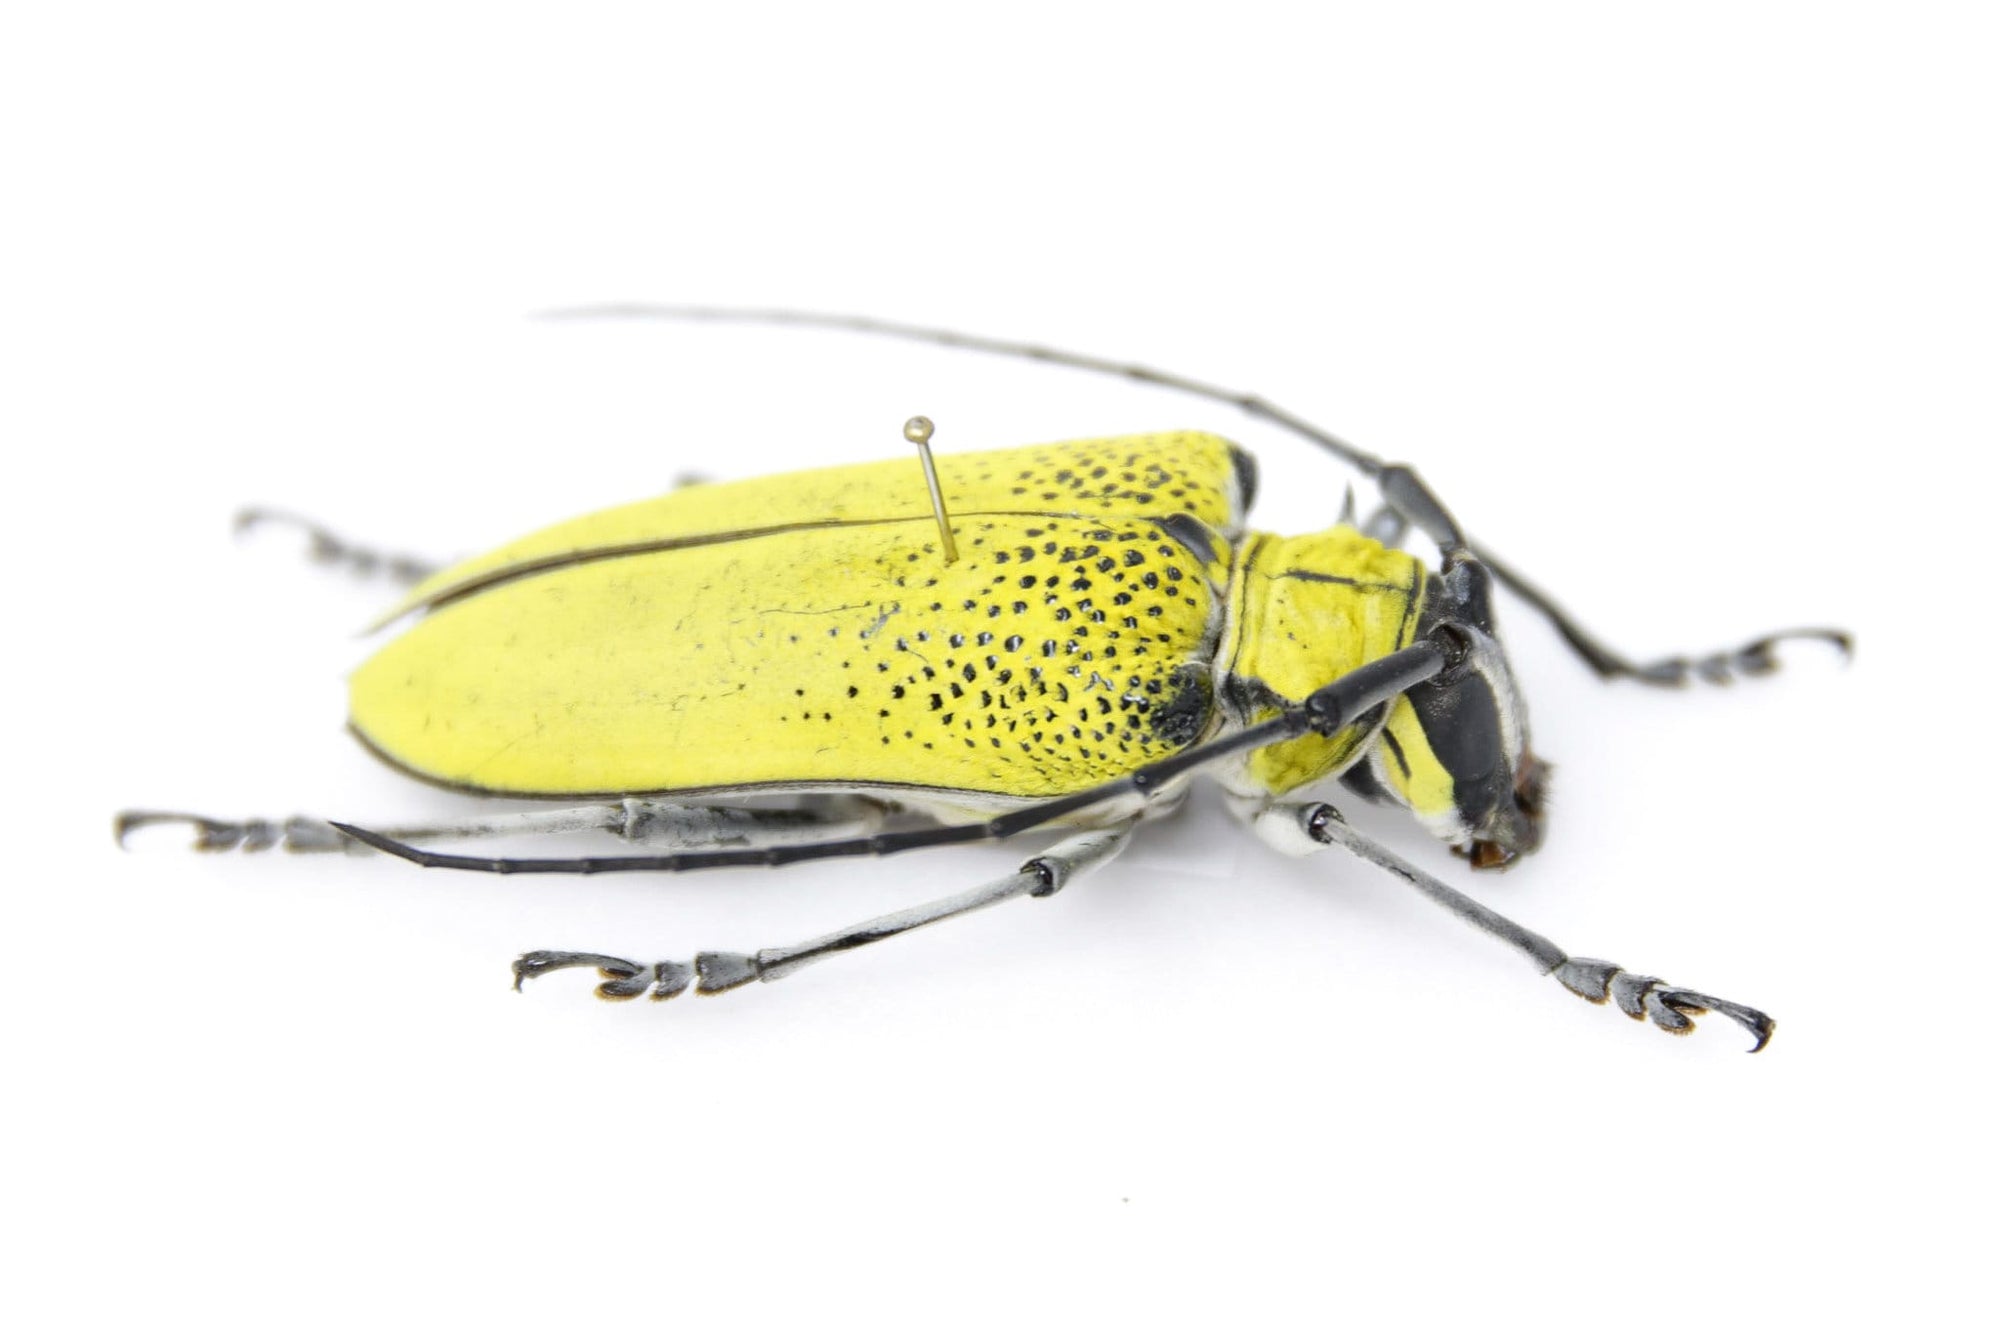 Celosterna pollinosa 51.6mm, A1 Real Beetle Pinned Set Specimen, Entomology Taxidermy #OC42